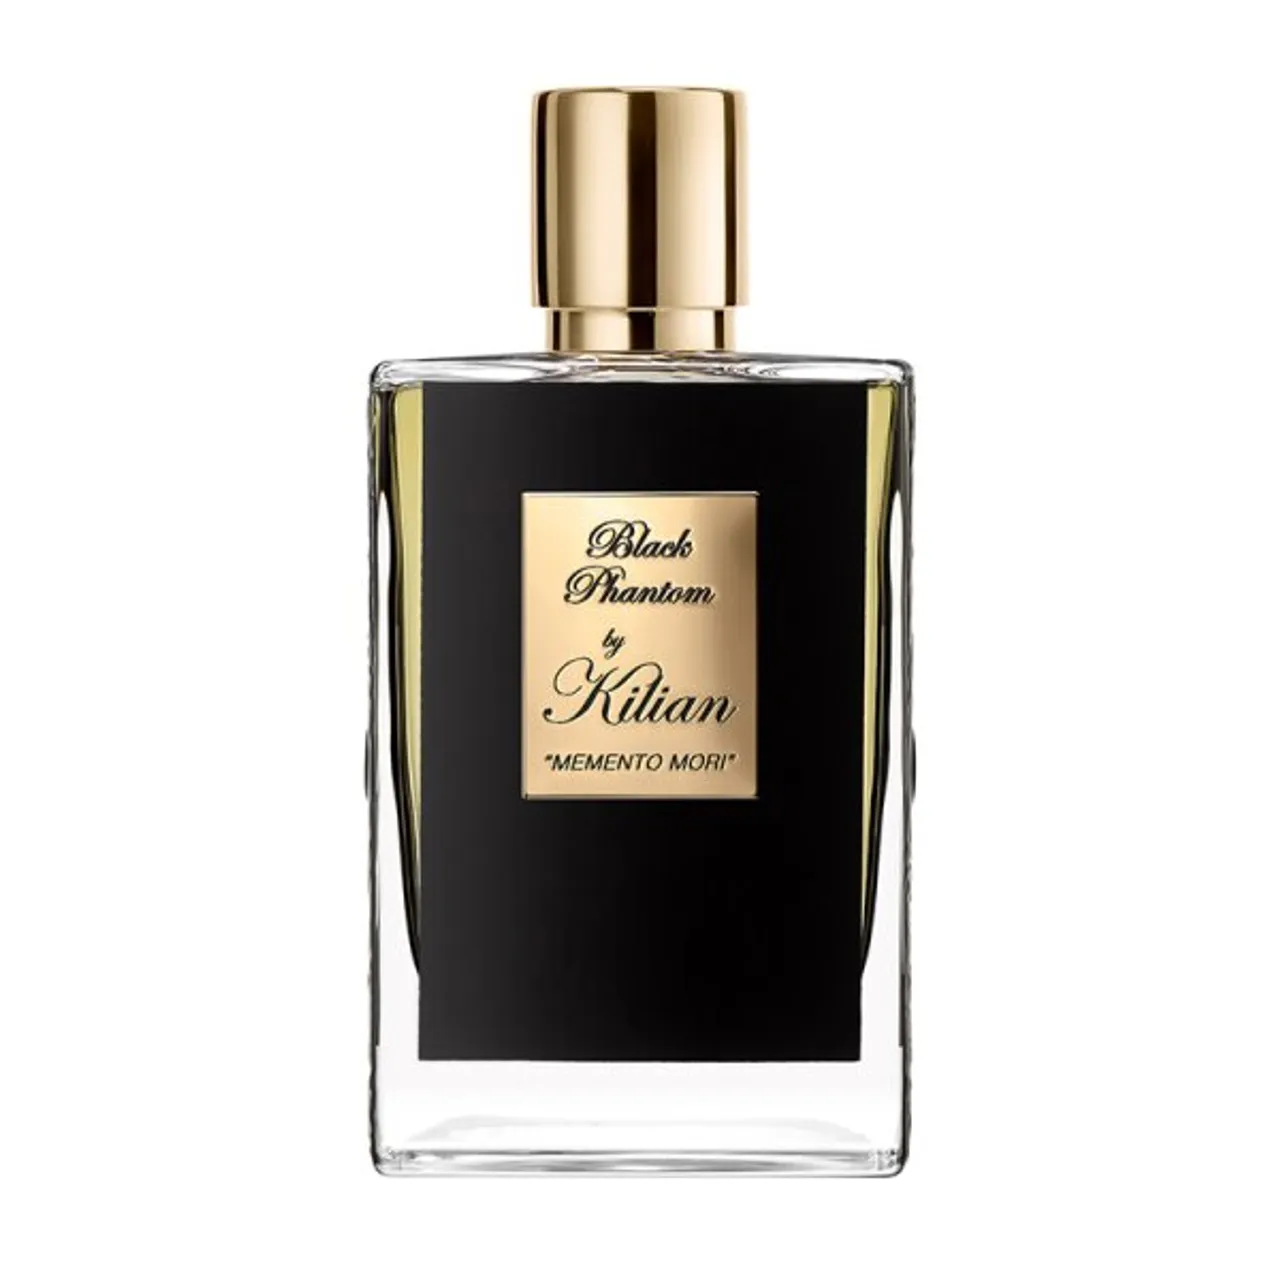 KILIAN PARIS Black Phantom Eau de Parfum (EdP) 50 ml